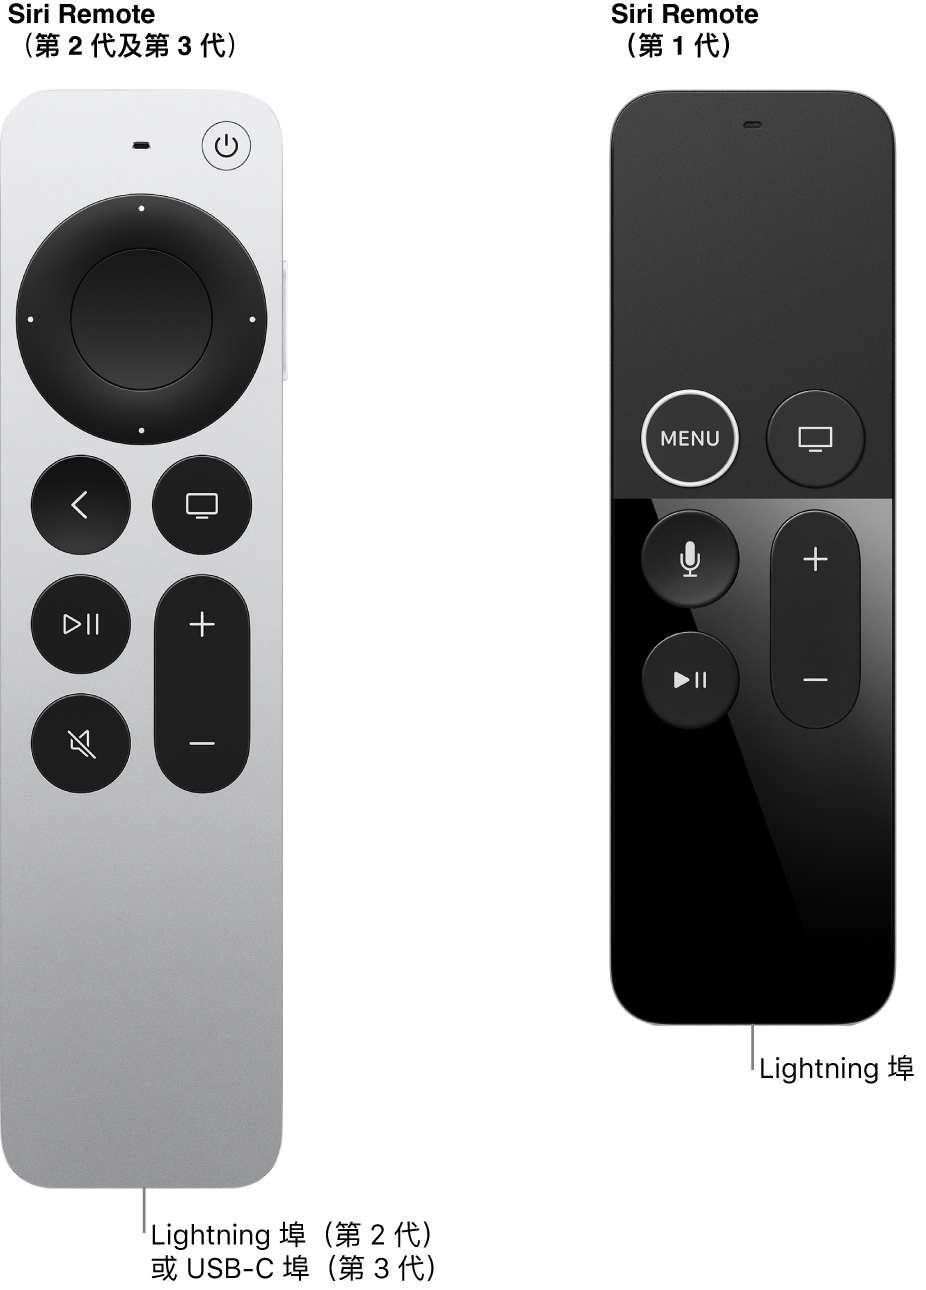 Siri Remote（第 2 代及第 3 代）和 Siri Remote（第 1 代）的影像，顯示連接埠